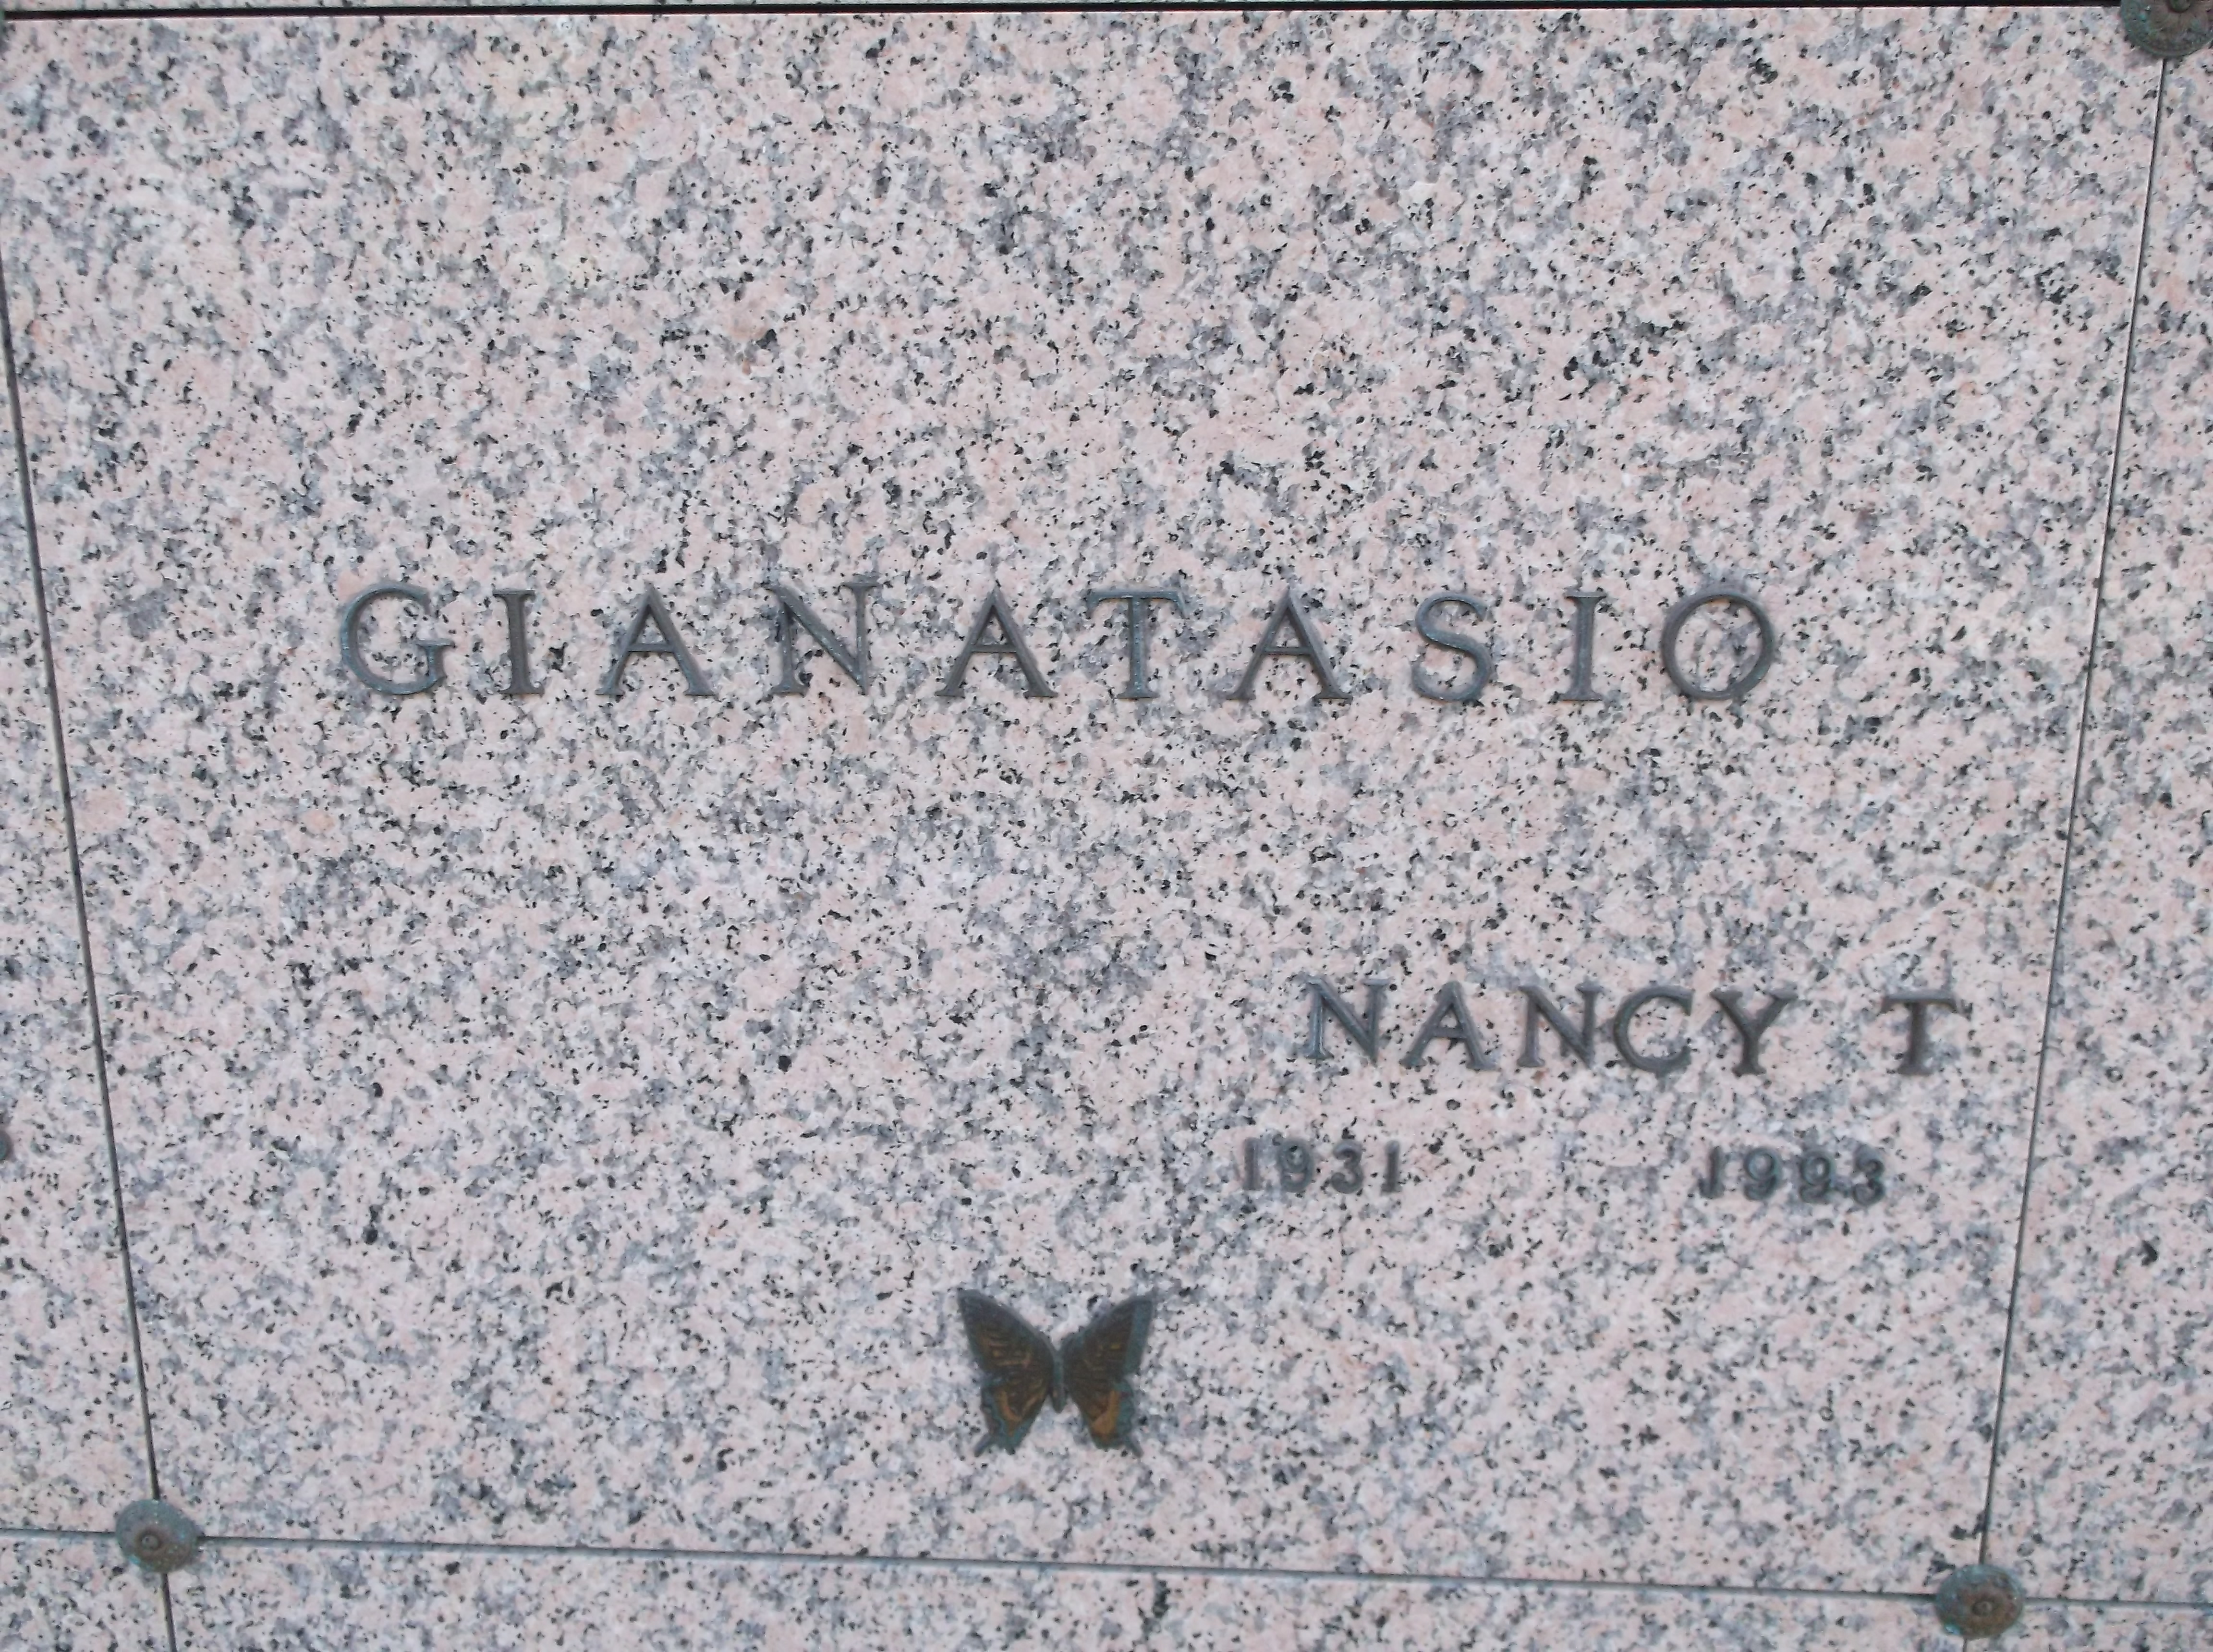 Nancy T Gianatasio